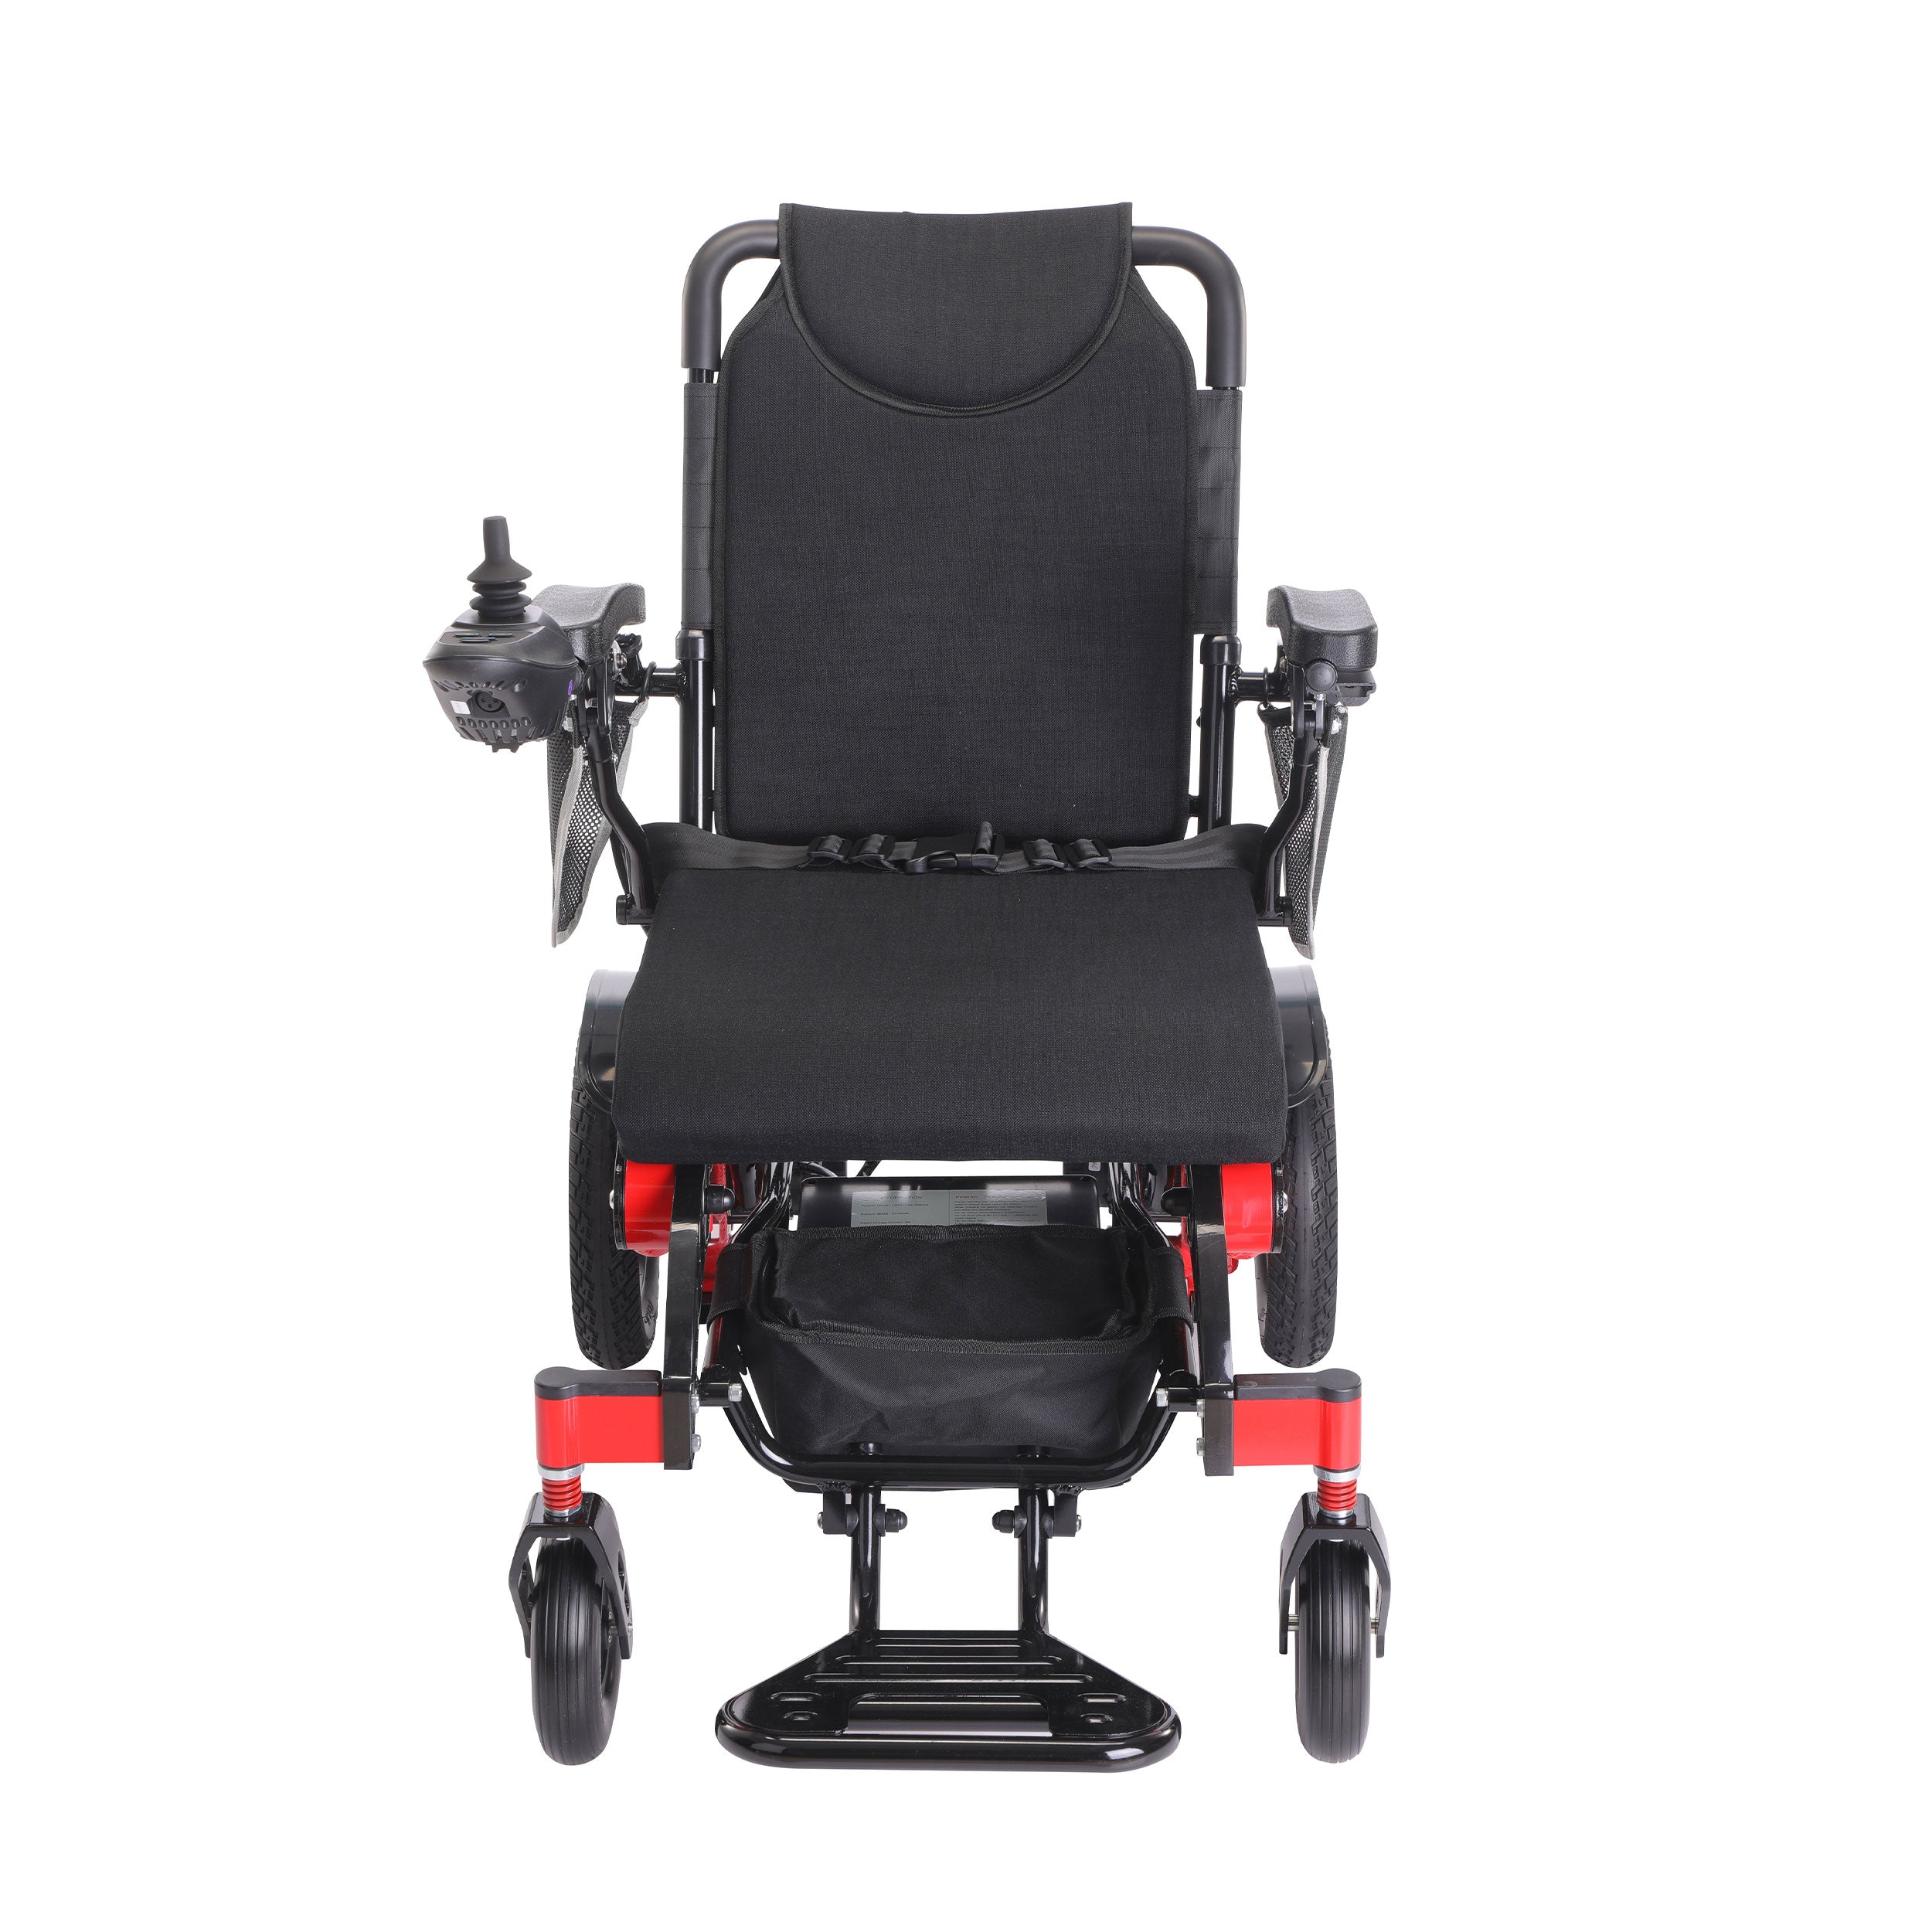 Power Wheelchair